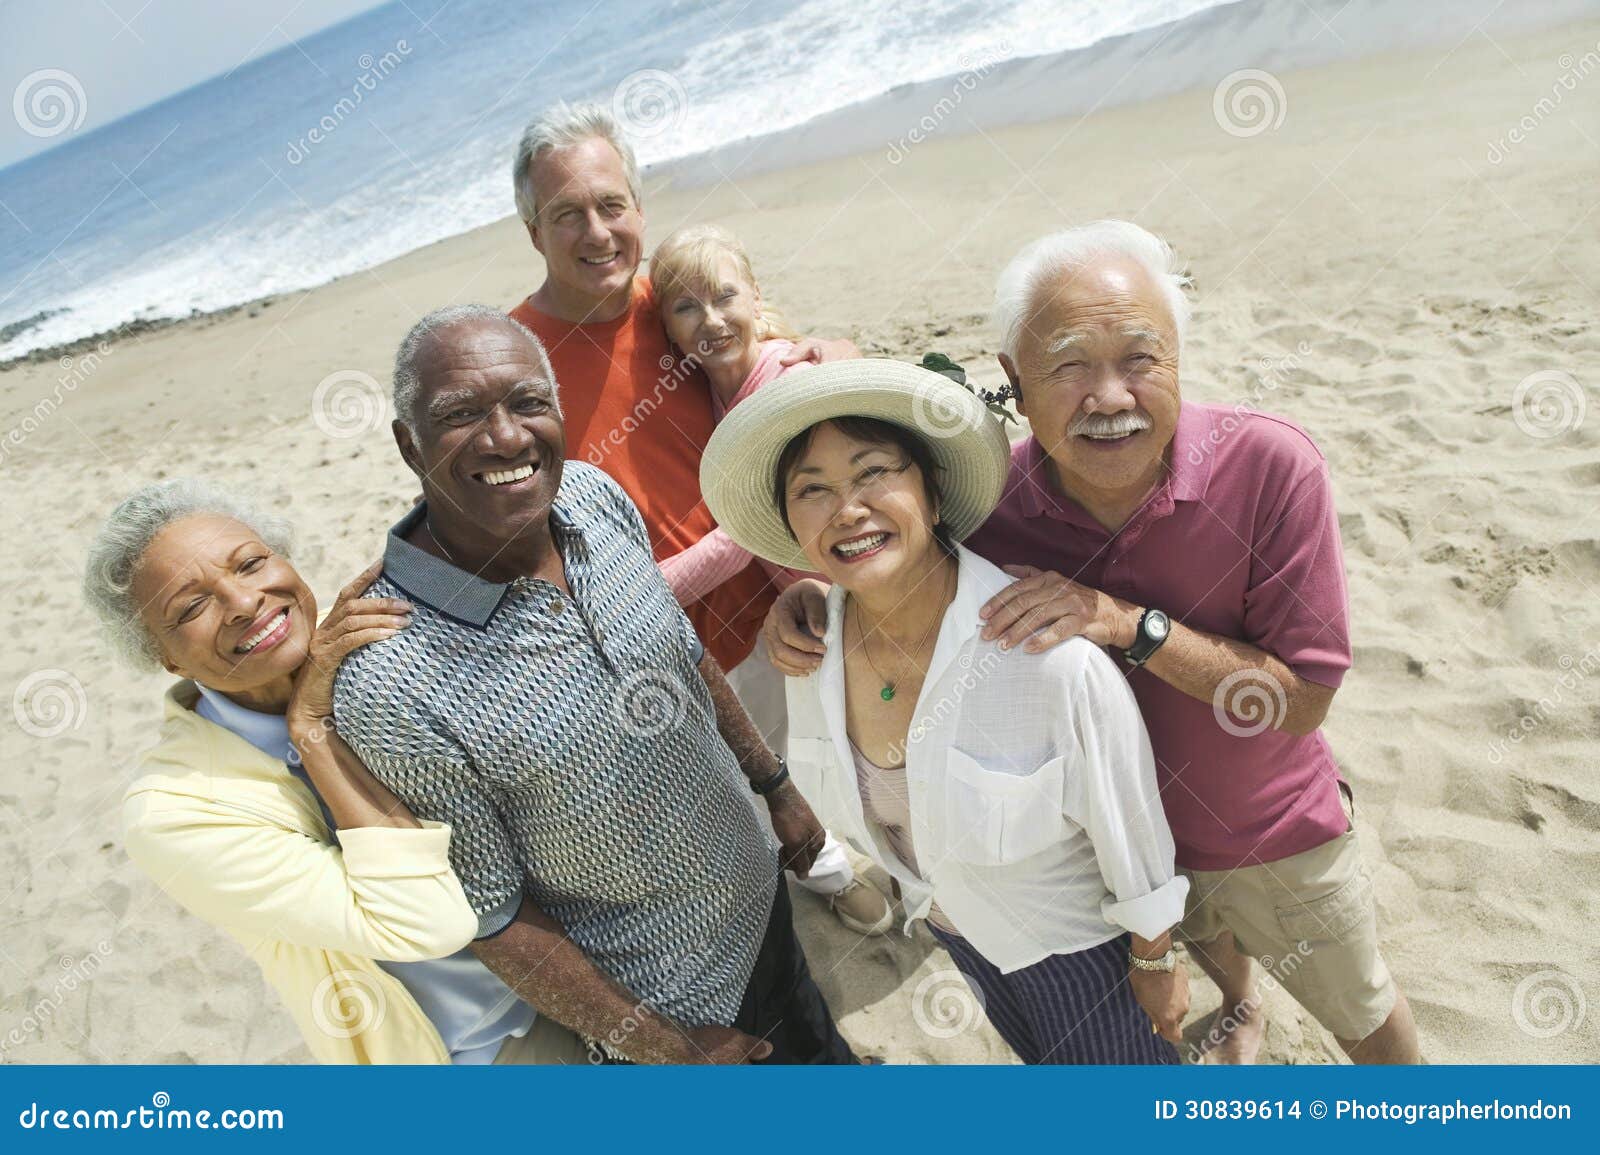 portrait of multiethnic couples at beach